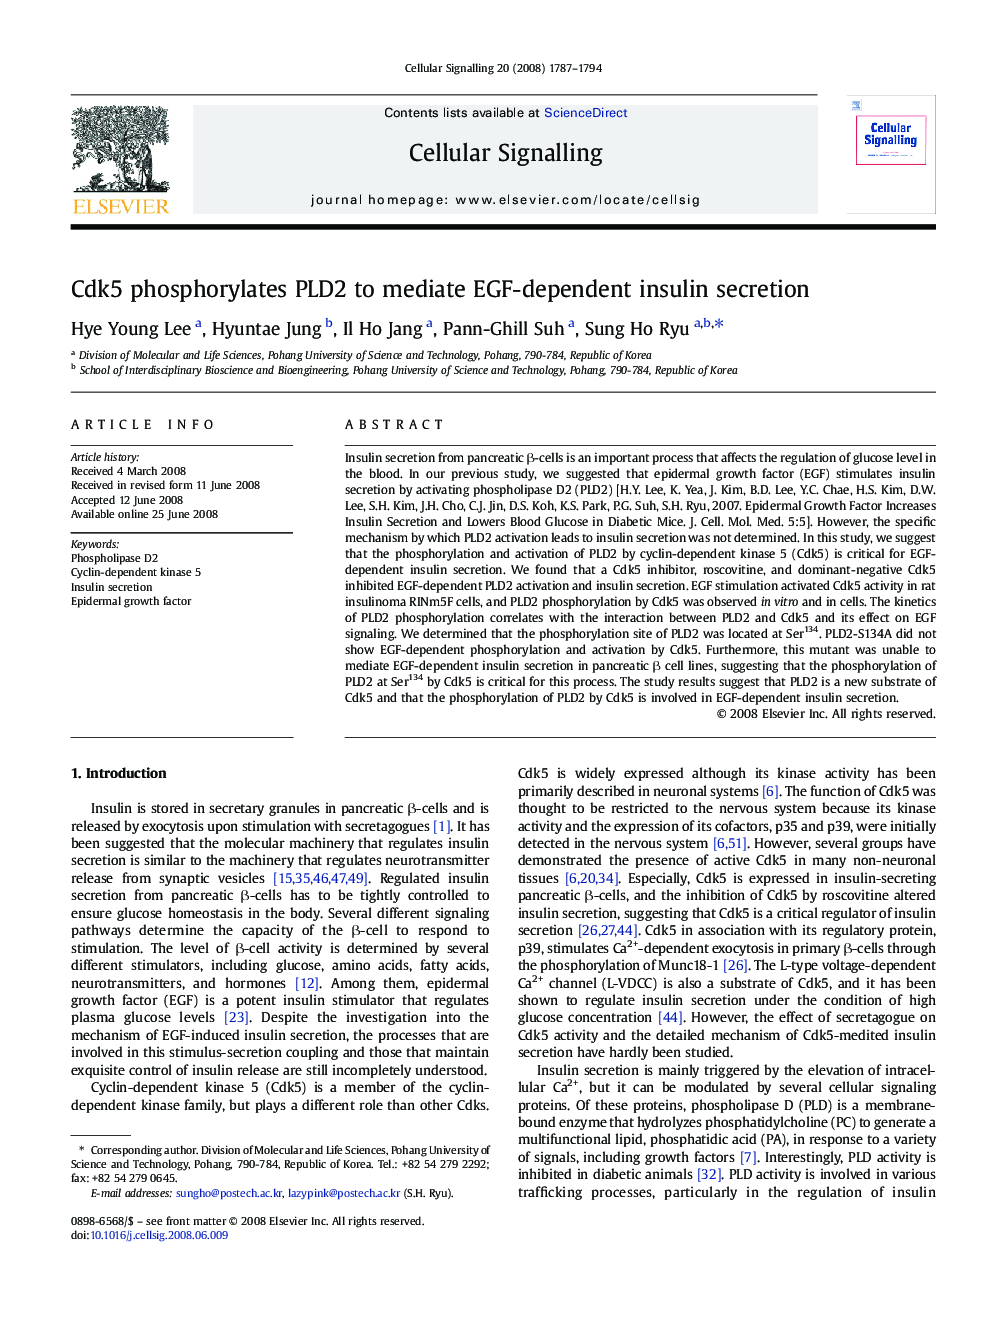 Cdk5 phosphorylates PLD2 to mediate EGF-dependent insulin secretion